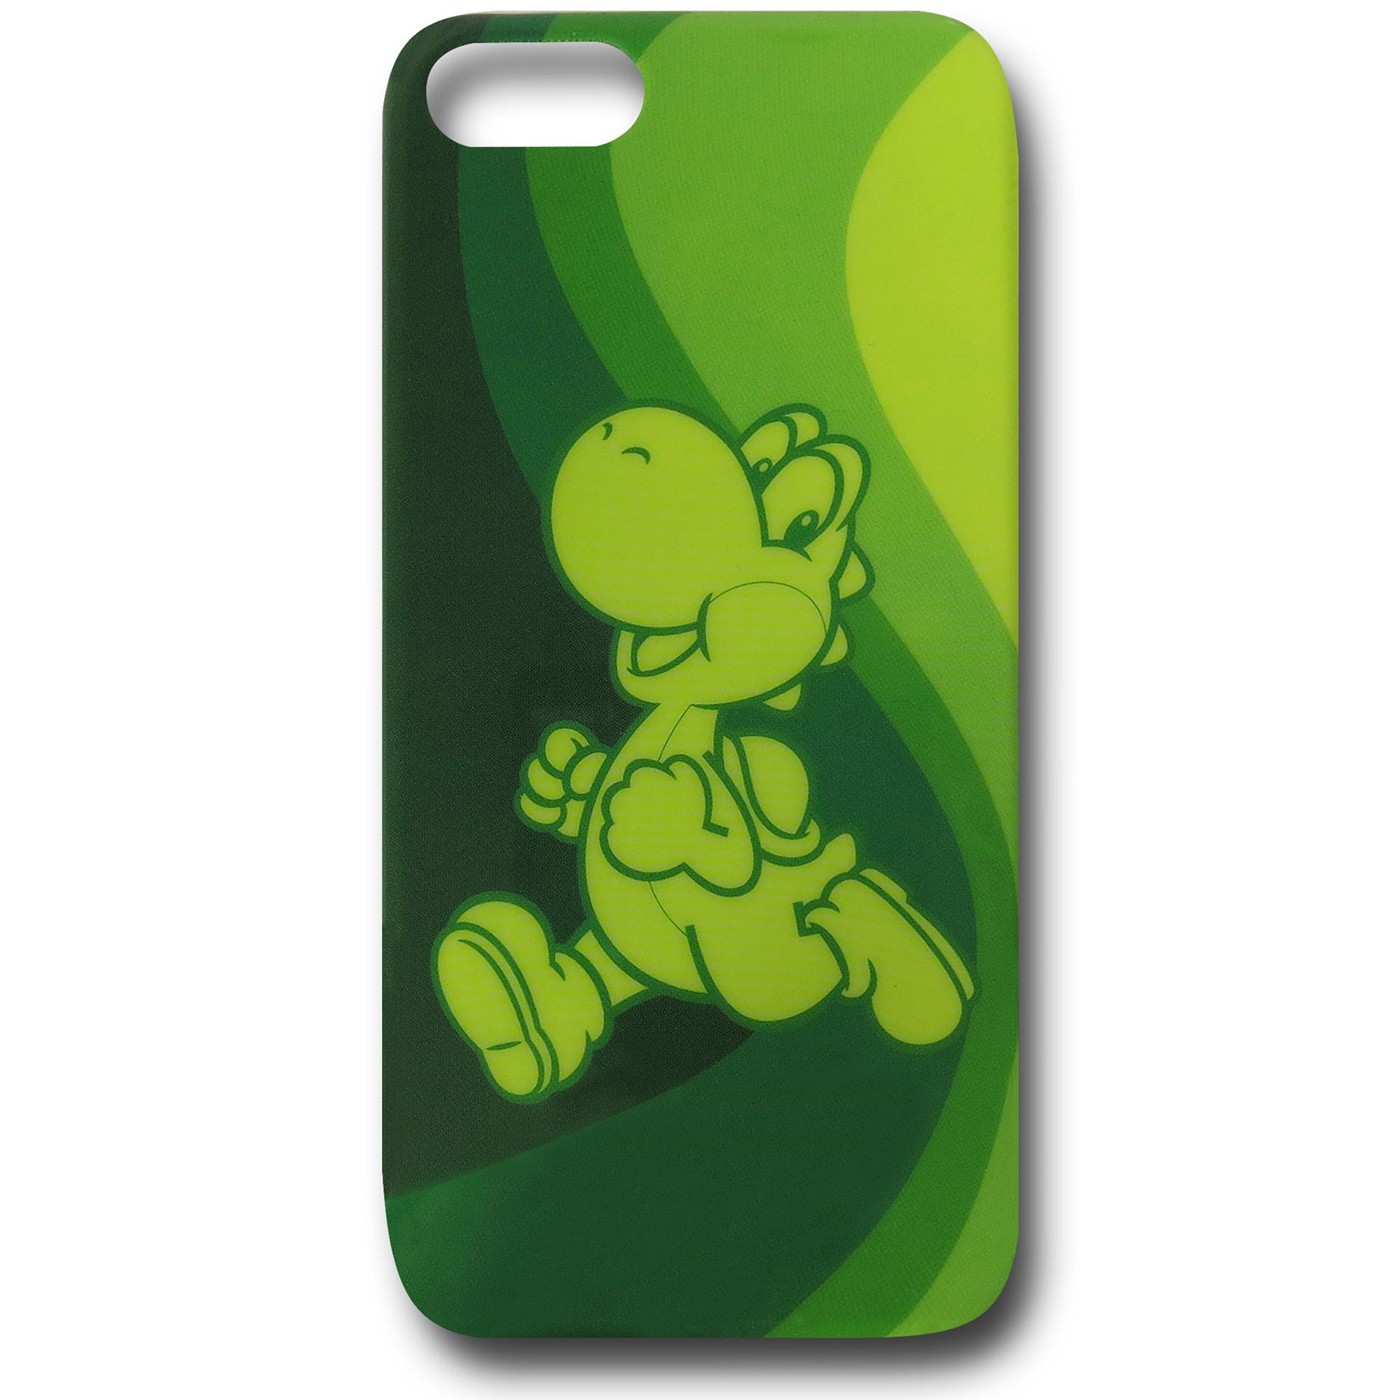 Nintendo Yoshi Green iPhone 5 Case